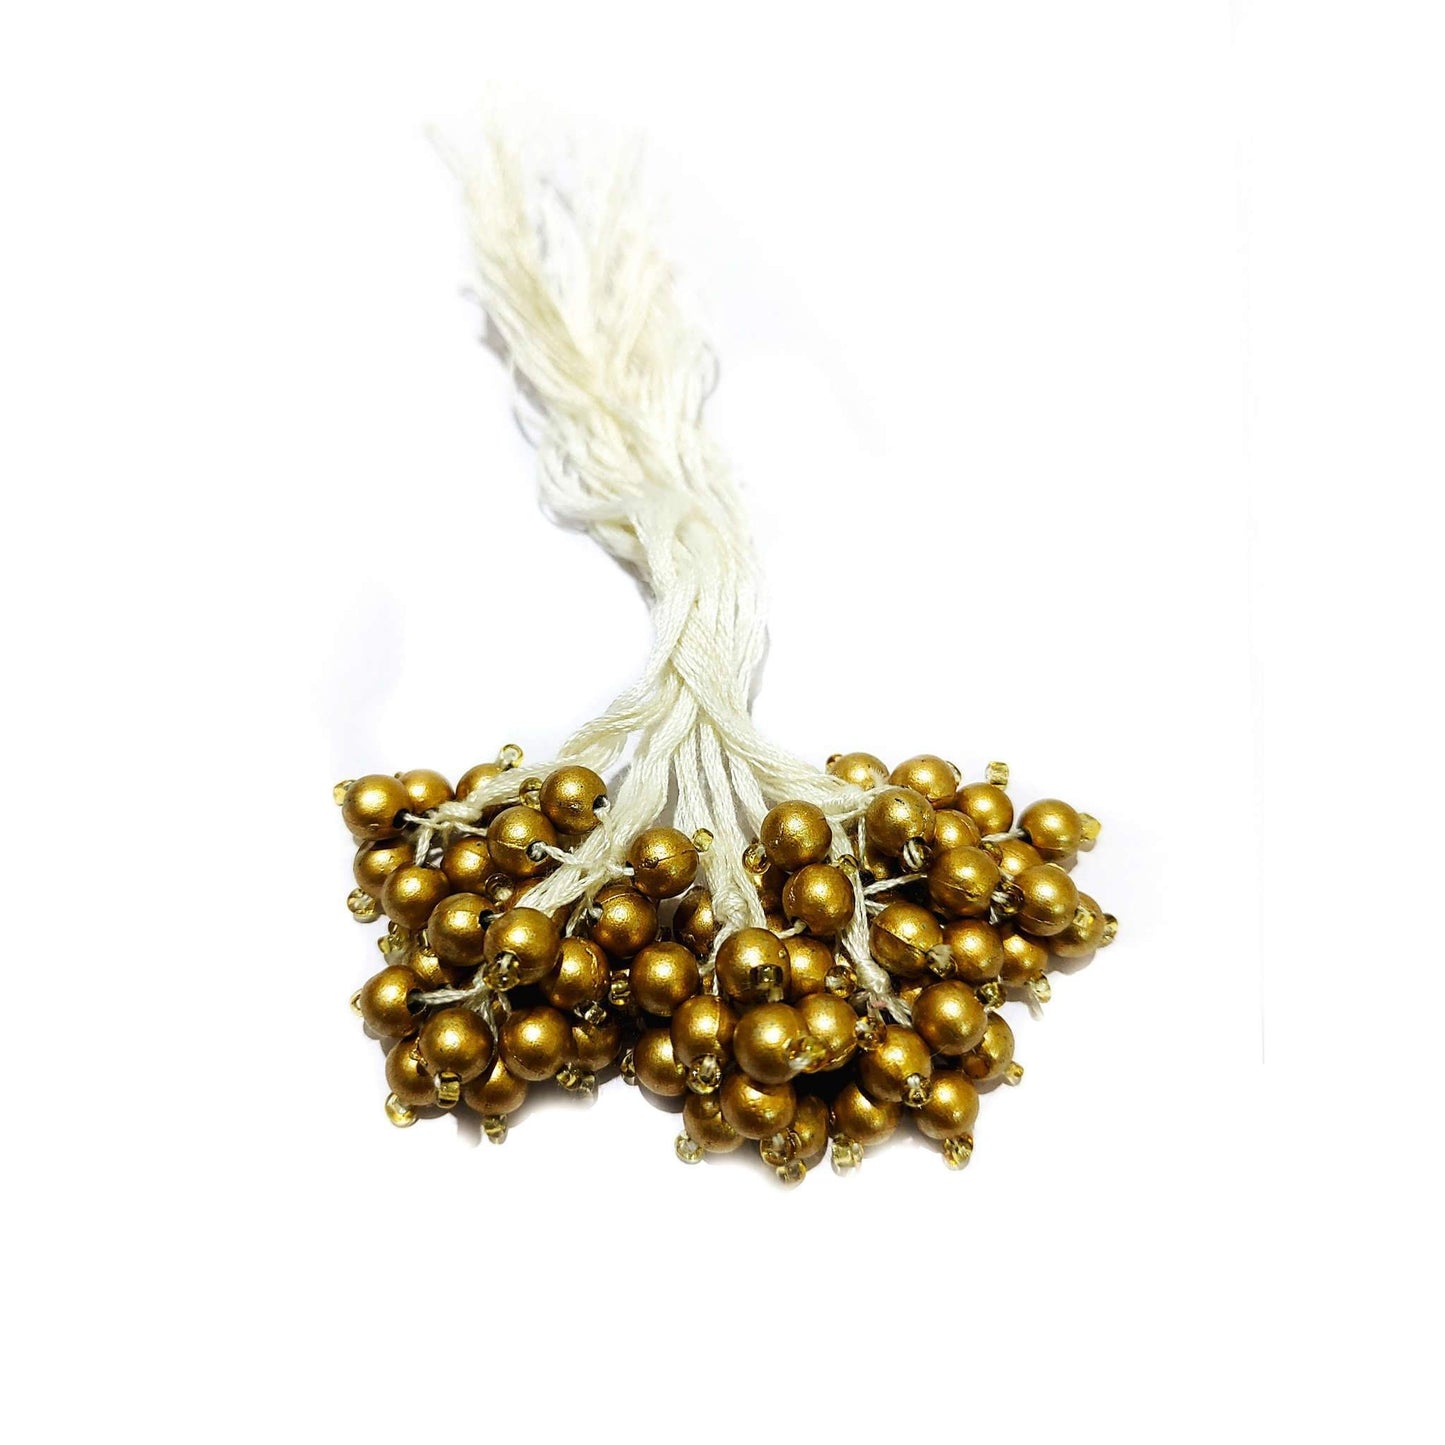 Indian Petals Multi purpose Handmade DIY Craft, Jewelry, Fabric Fringe Bead Tassel - Design 802, Goldenrod